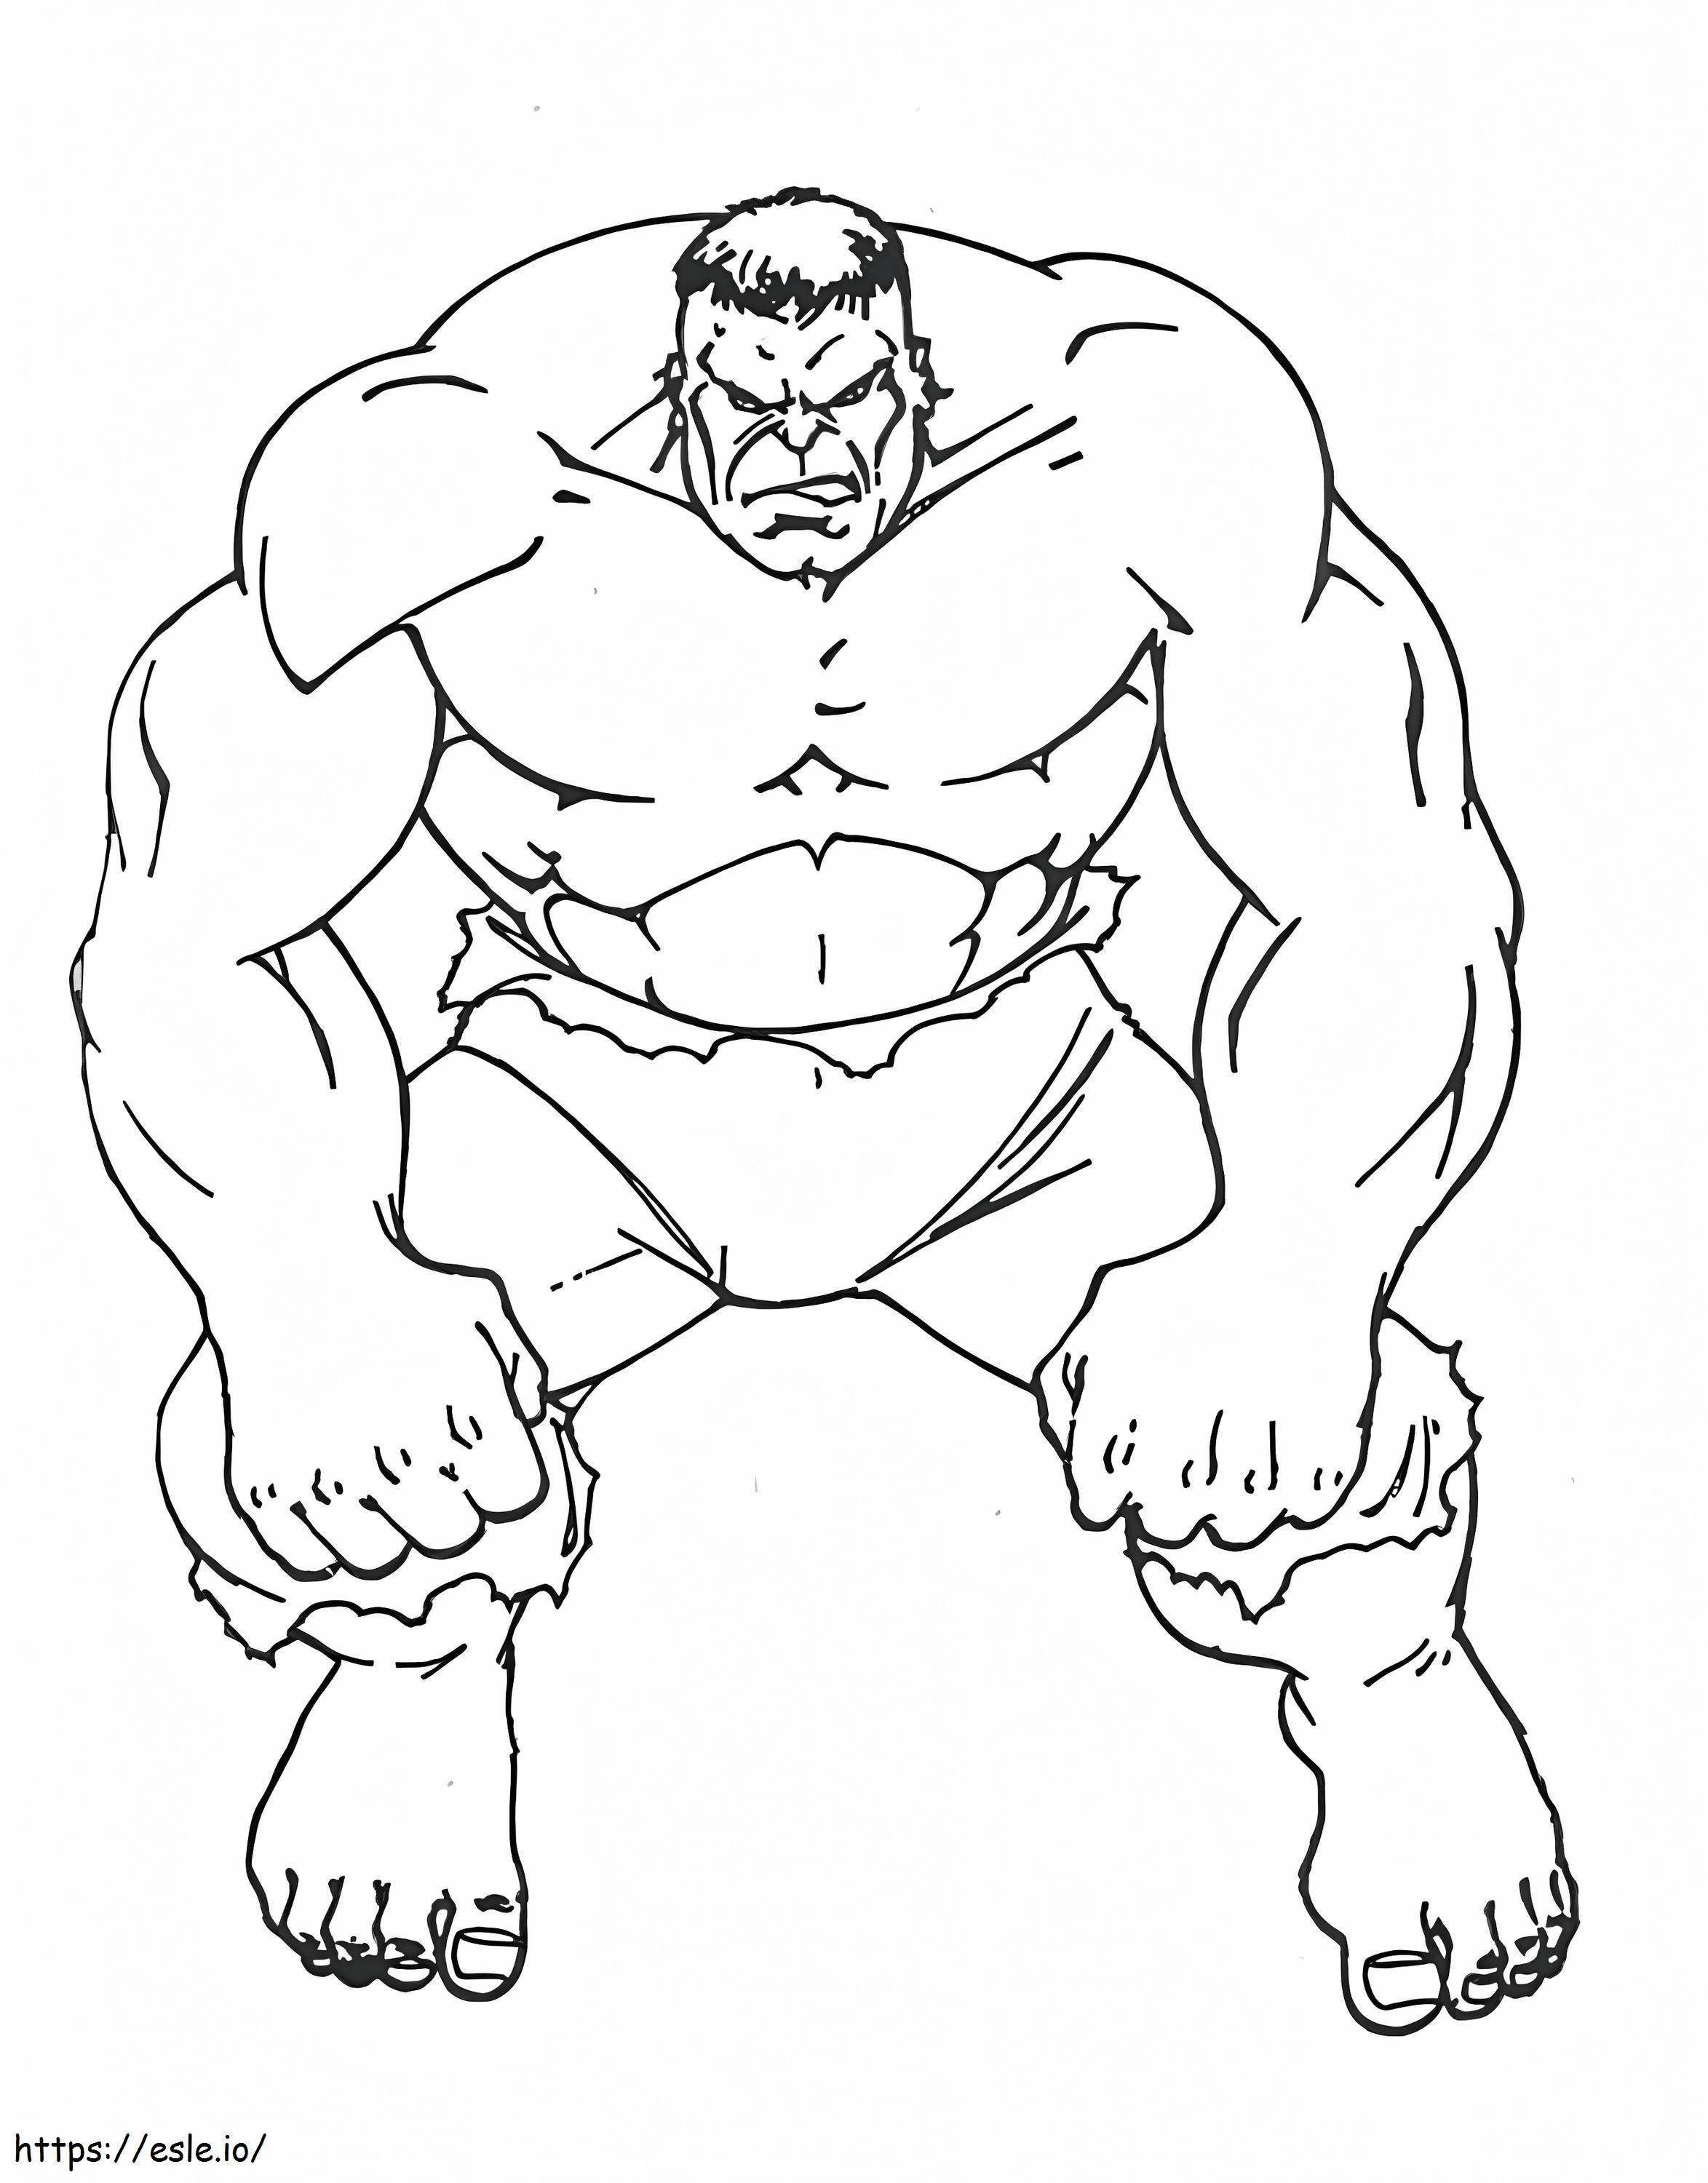 Genial Hulk coloring page